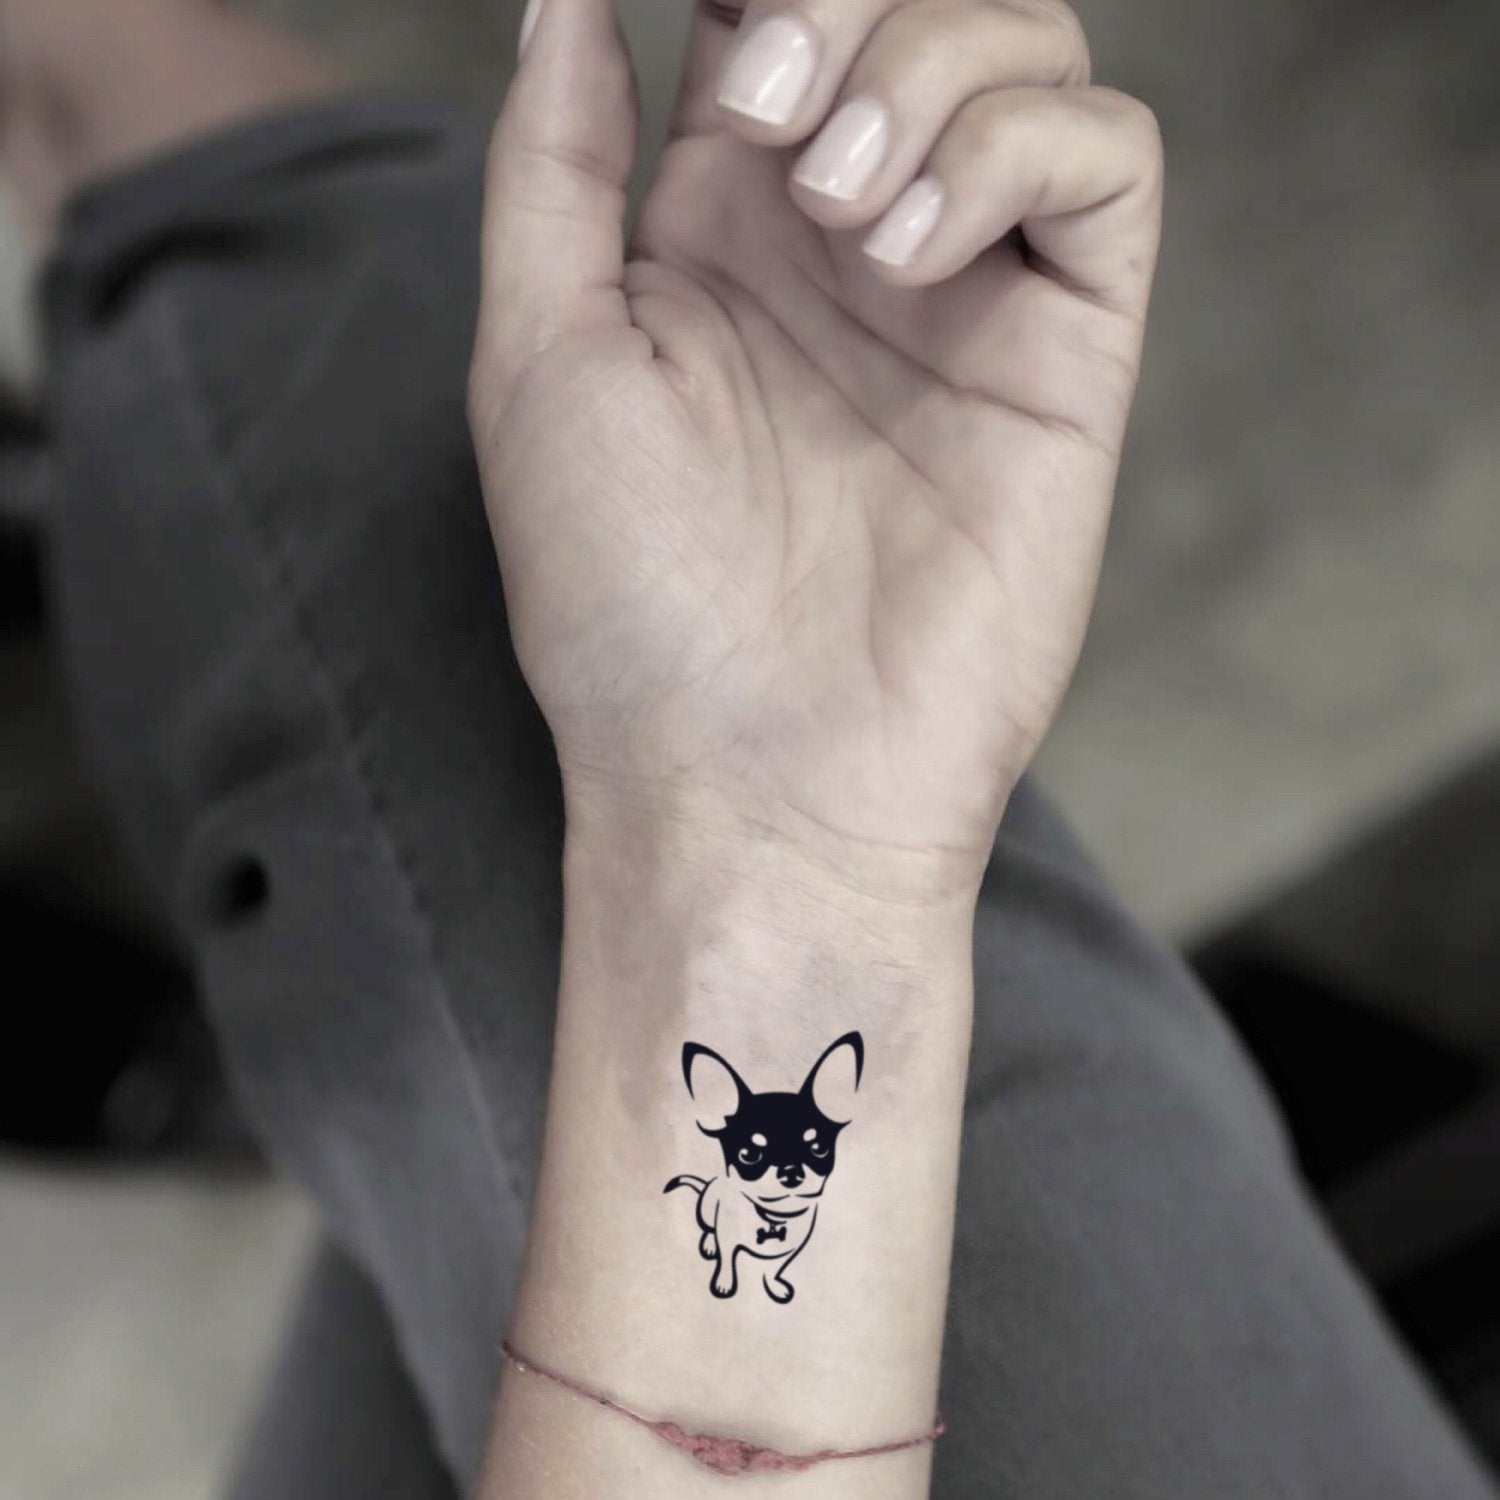 fake small chihuahua animal temporary tattoo sticker design idea on wrist